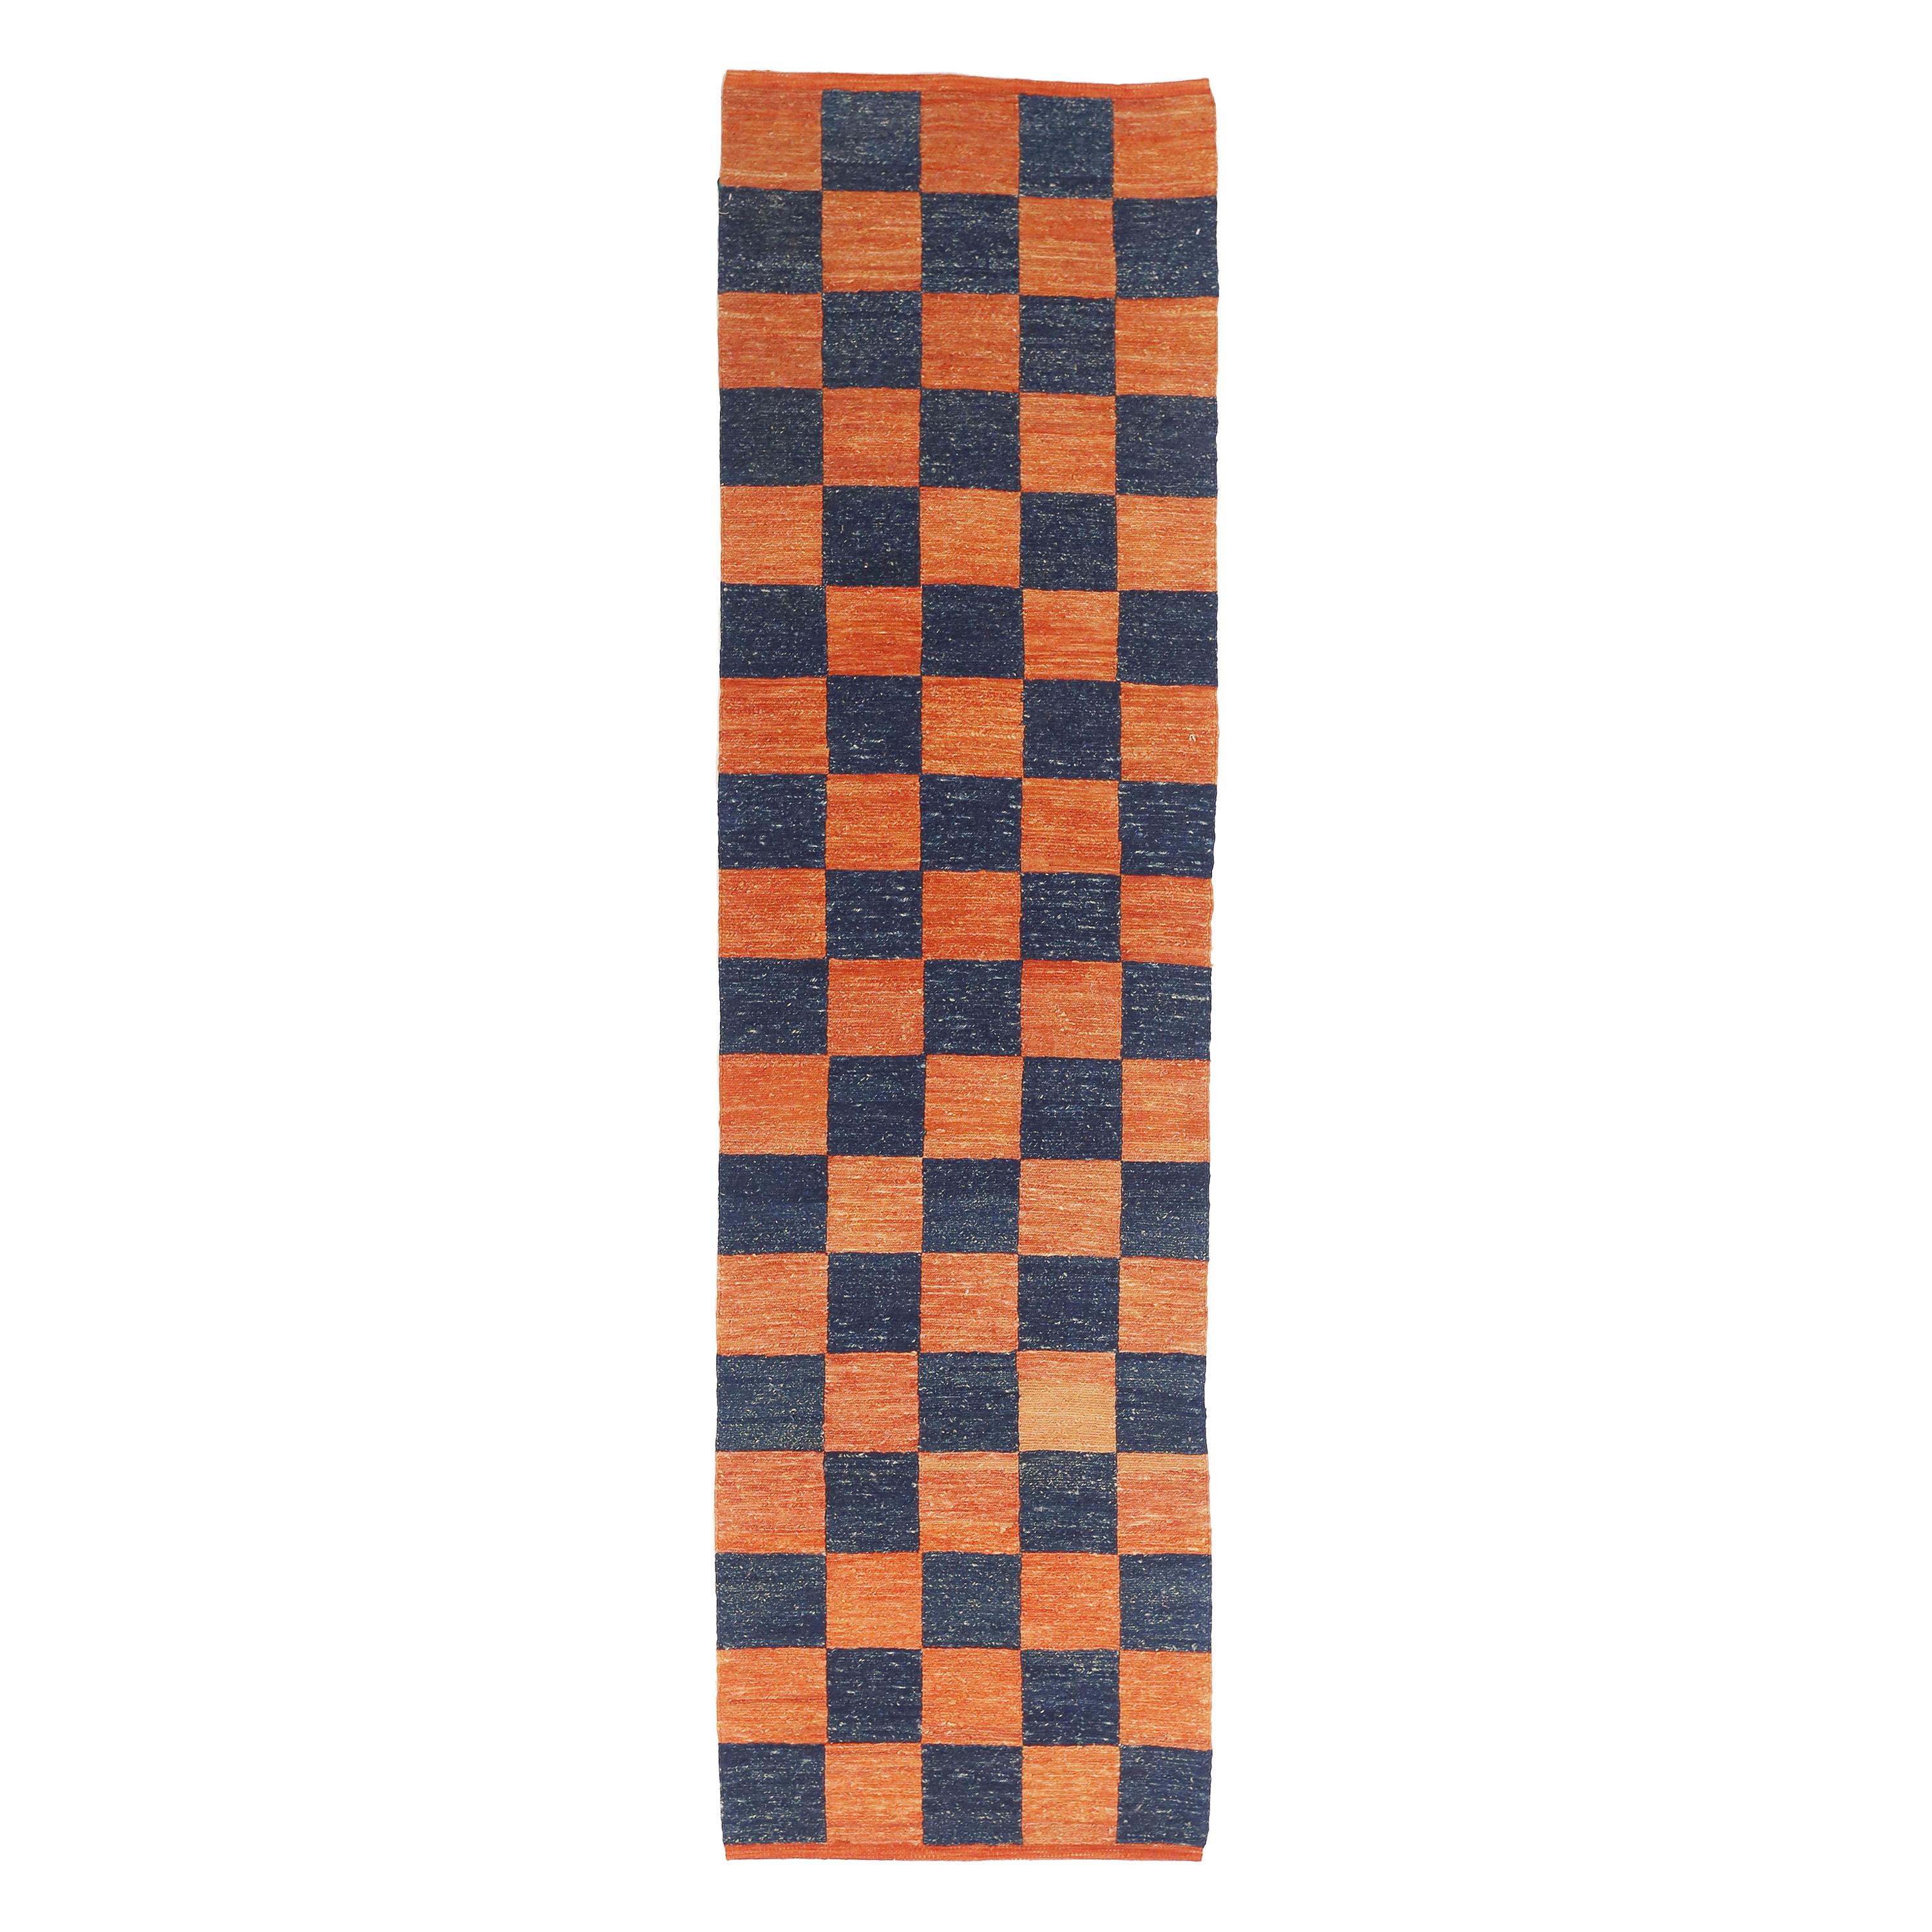 Modern Turkish Kilim Runner Rug with Orange and Navy Tiles Pattern